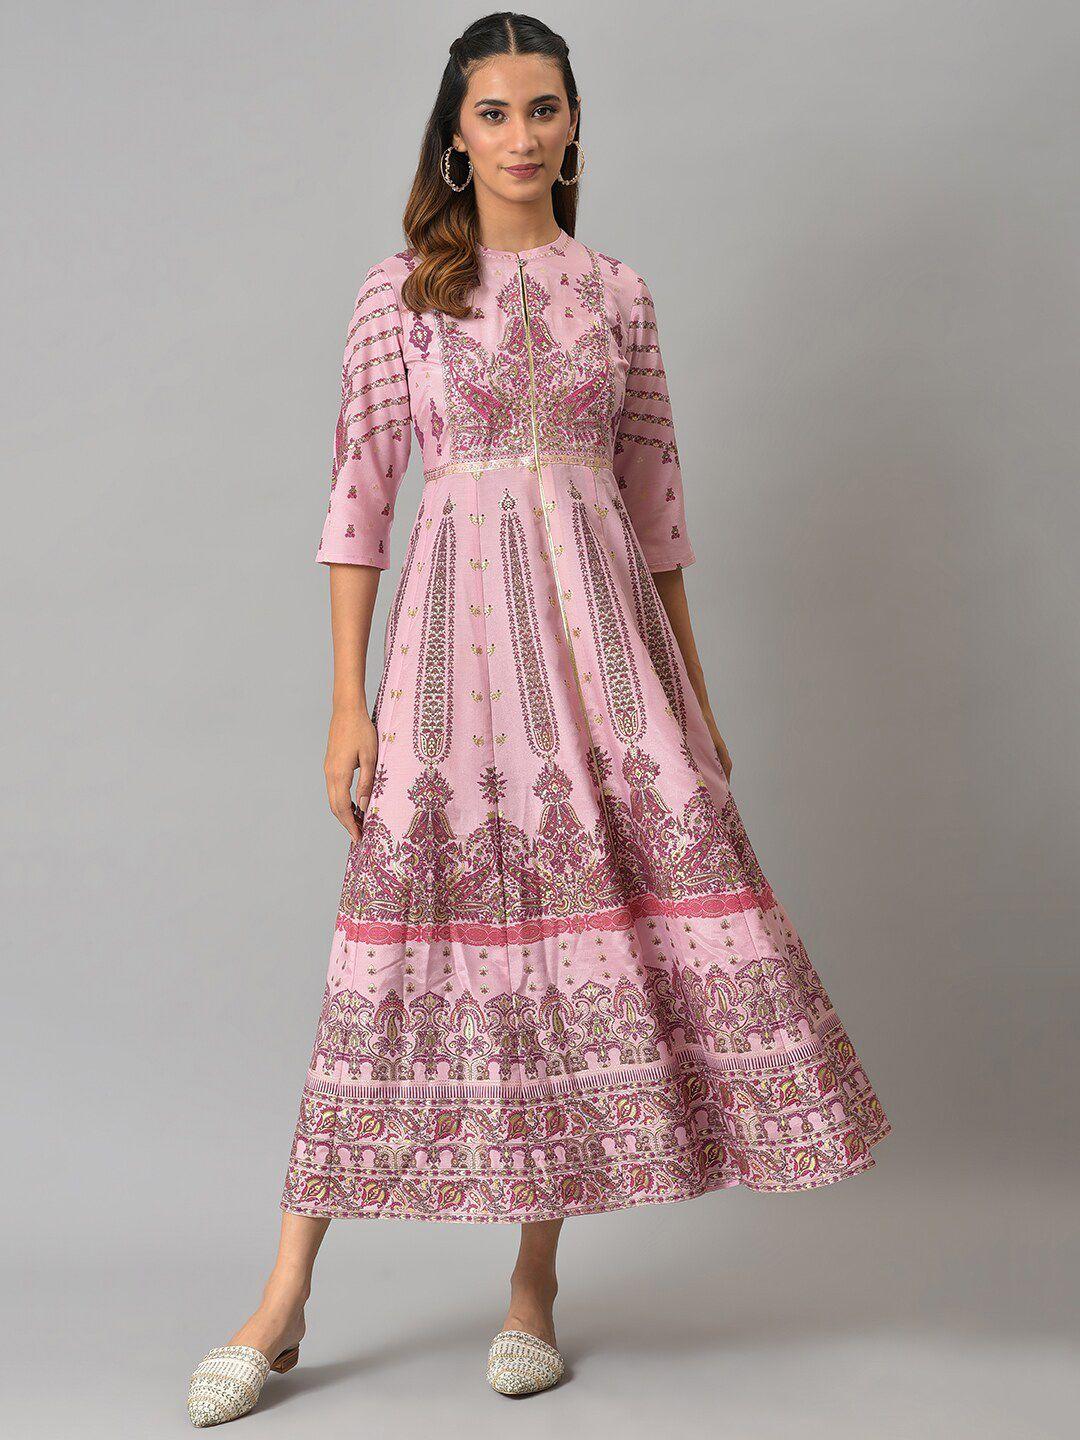 w pink ethnic motifs midi fit and flare dress